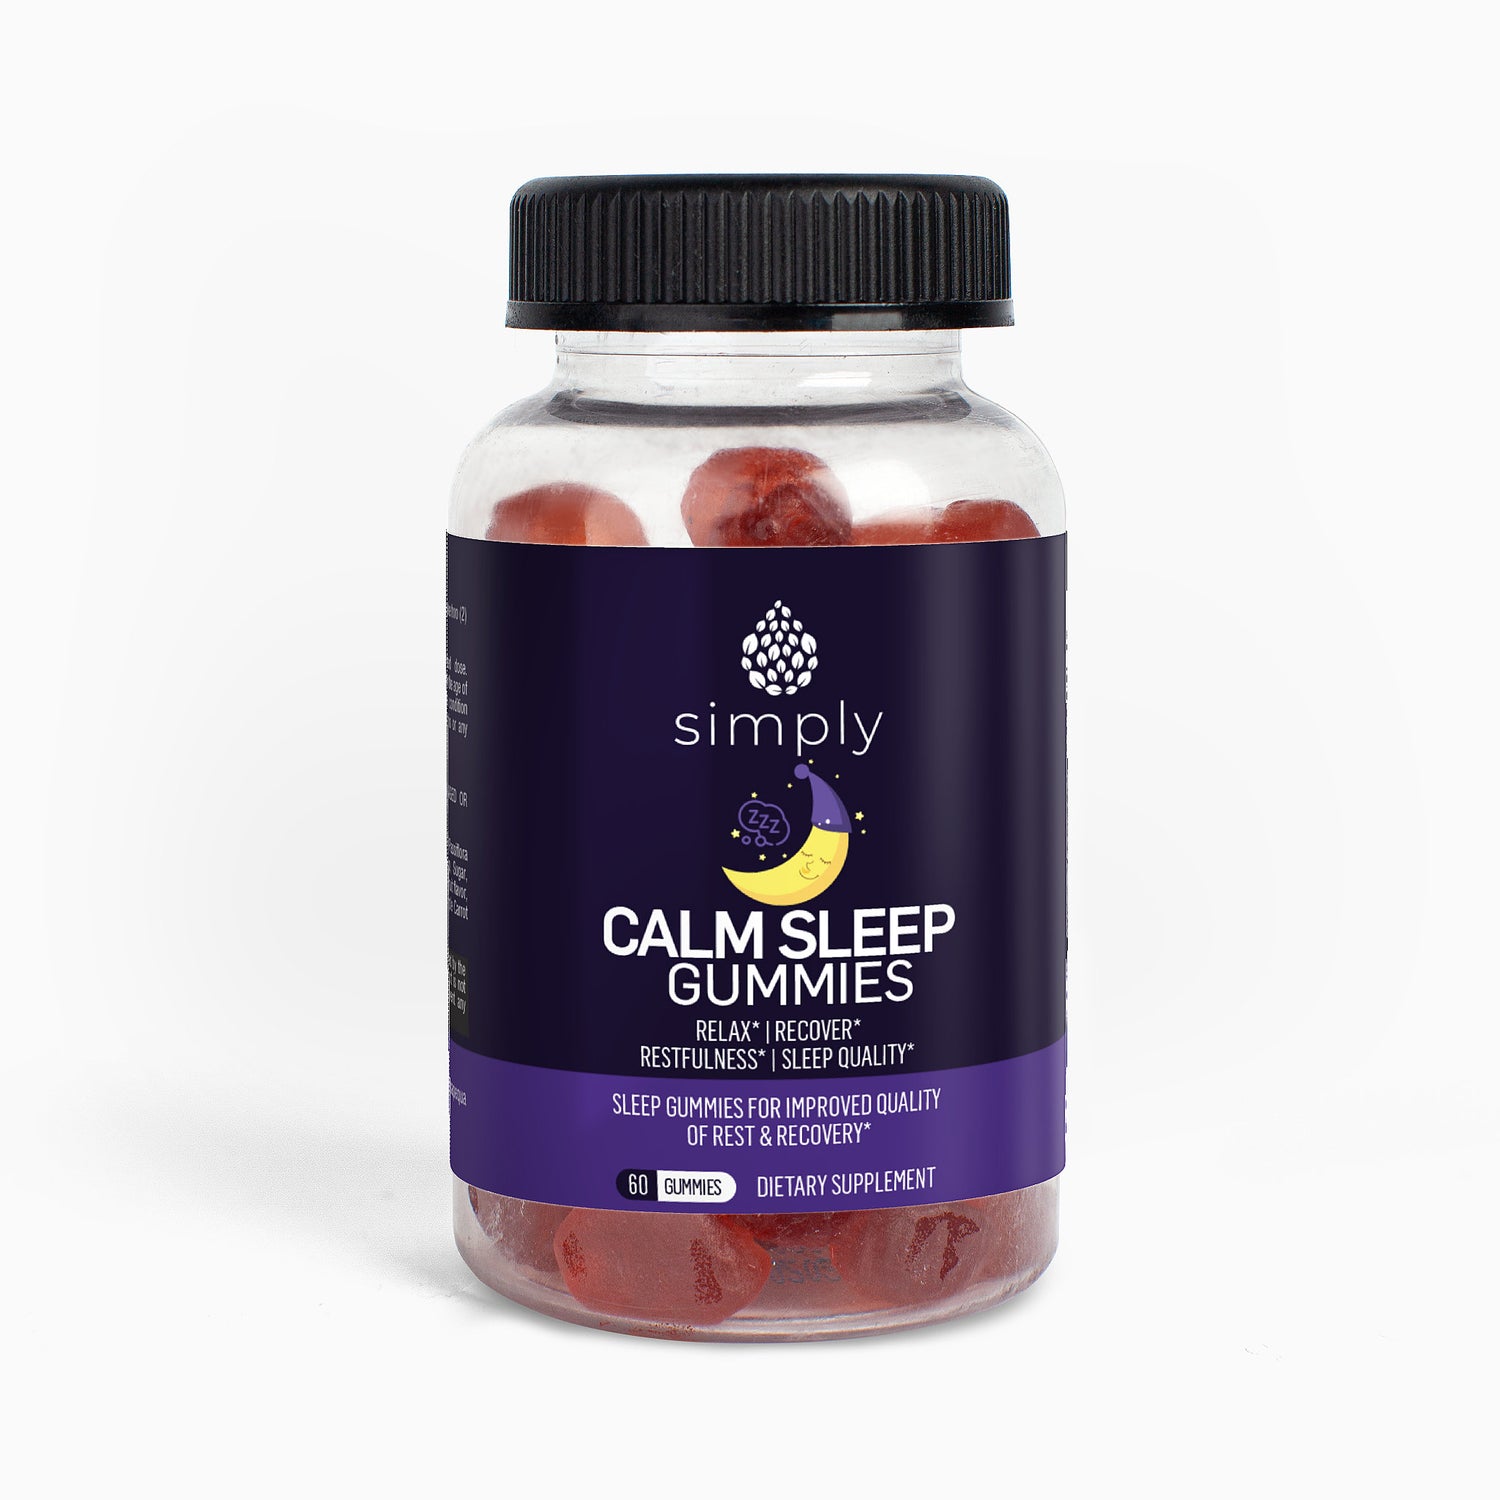 Calm Sleep Gummies Dietary Supplement